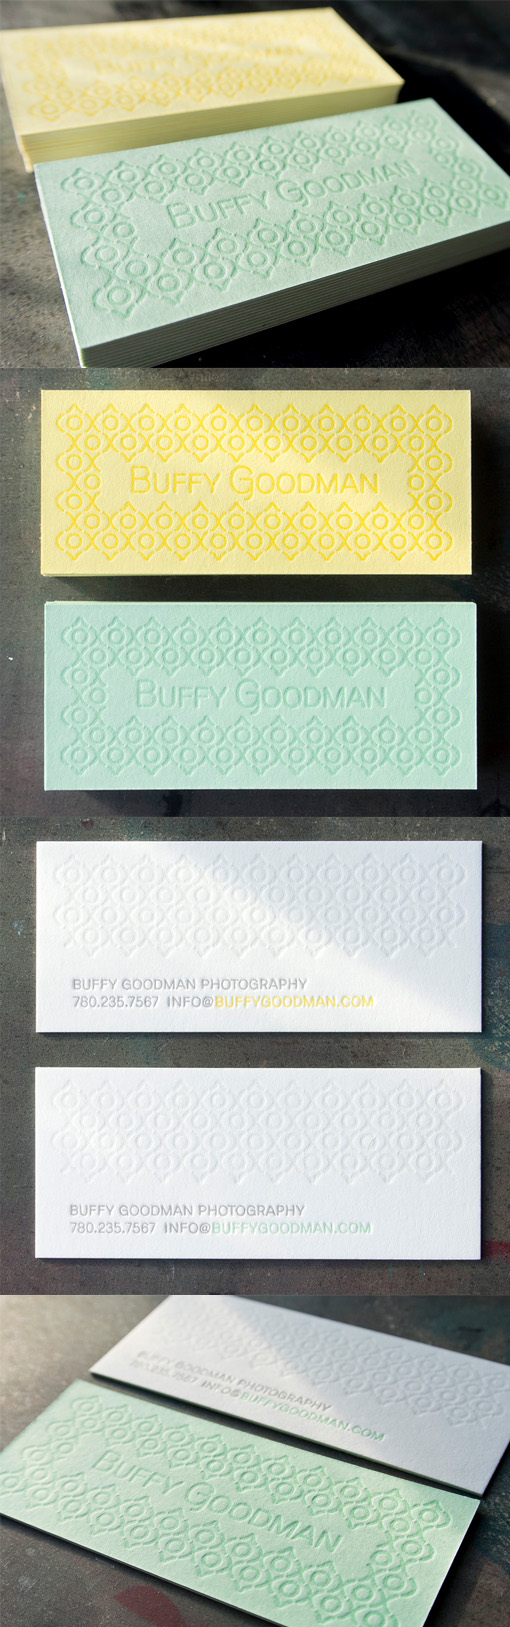 Subtle Textured Pastel Letterpress Business Card For A Photographer